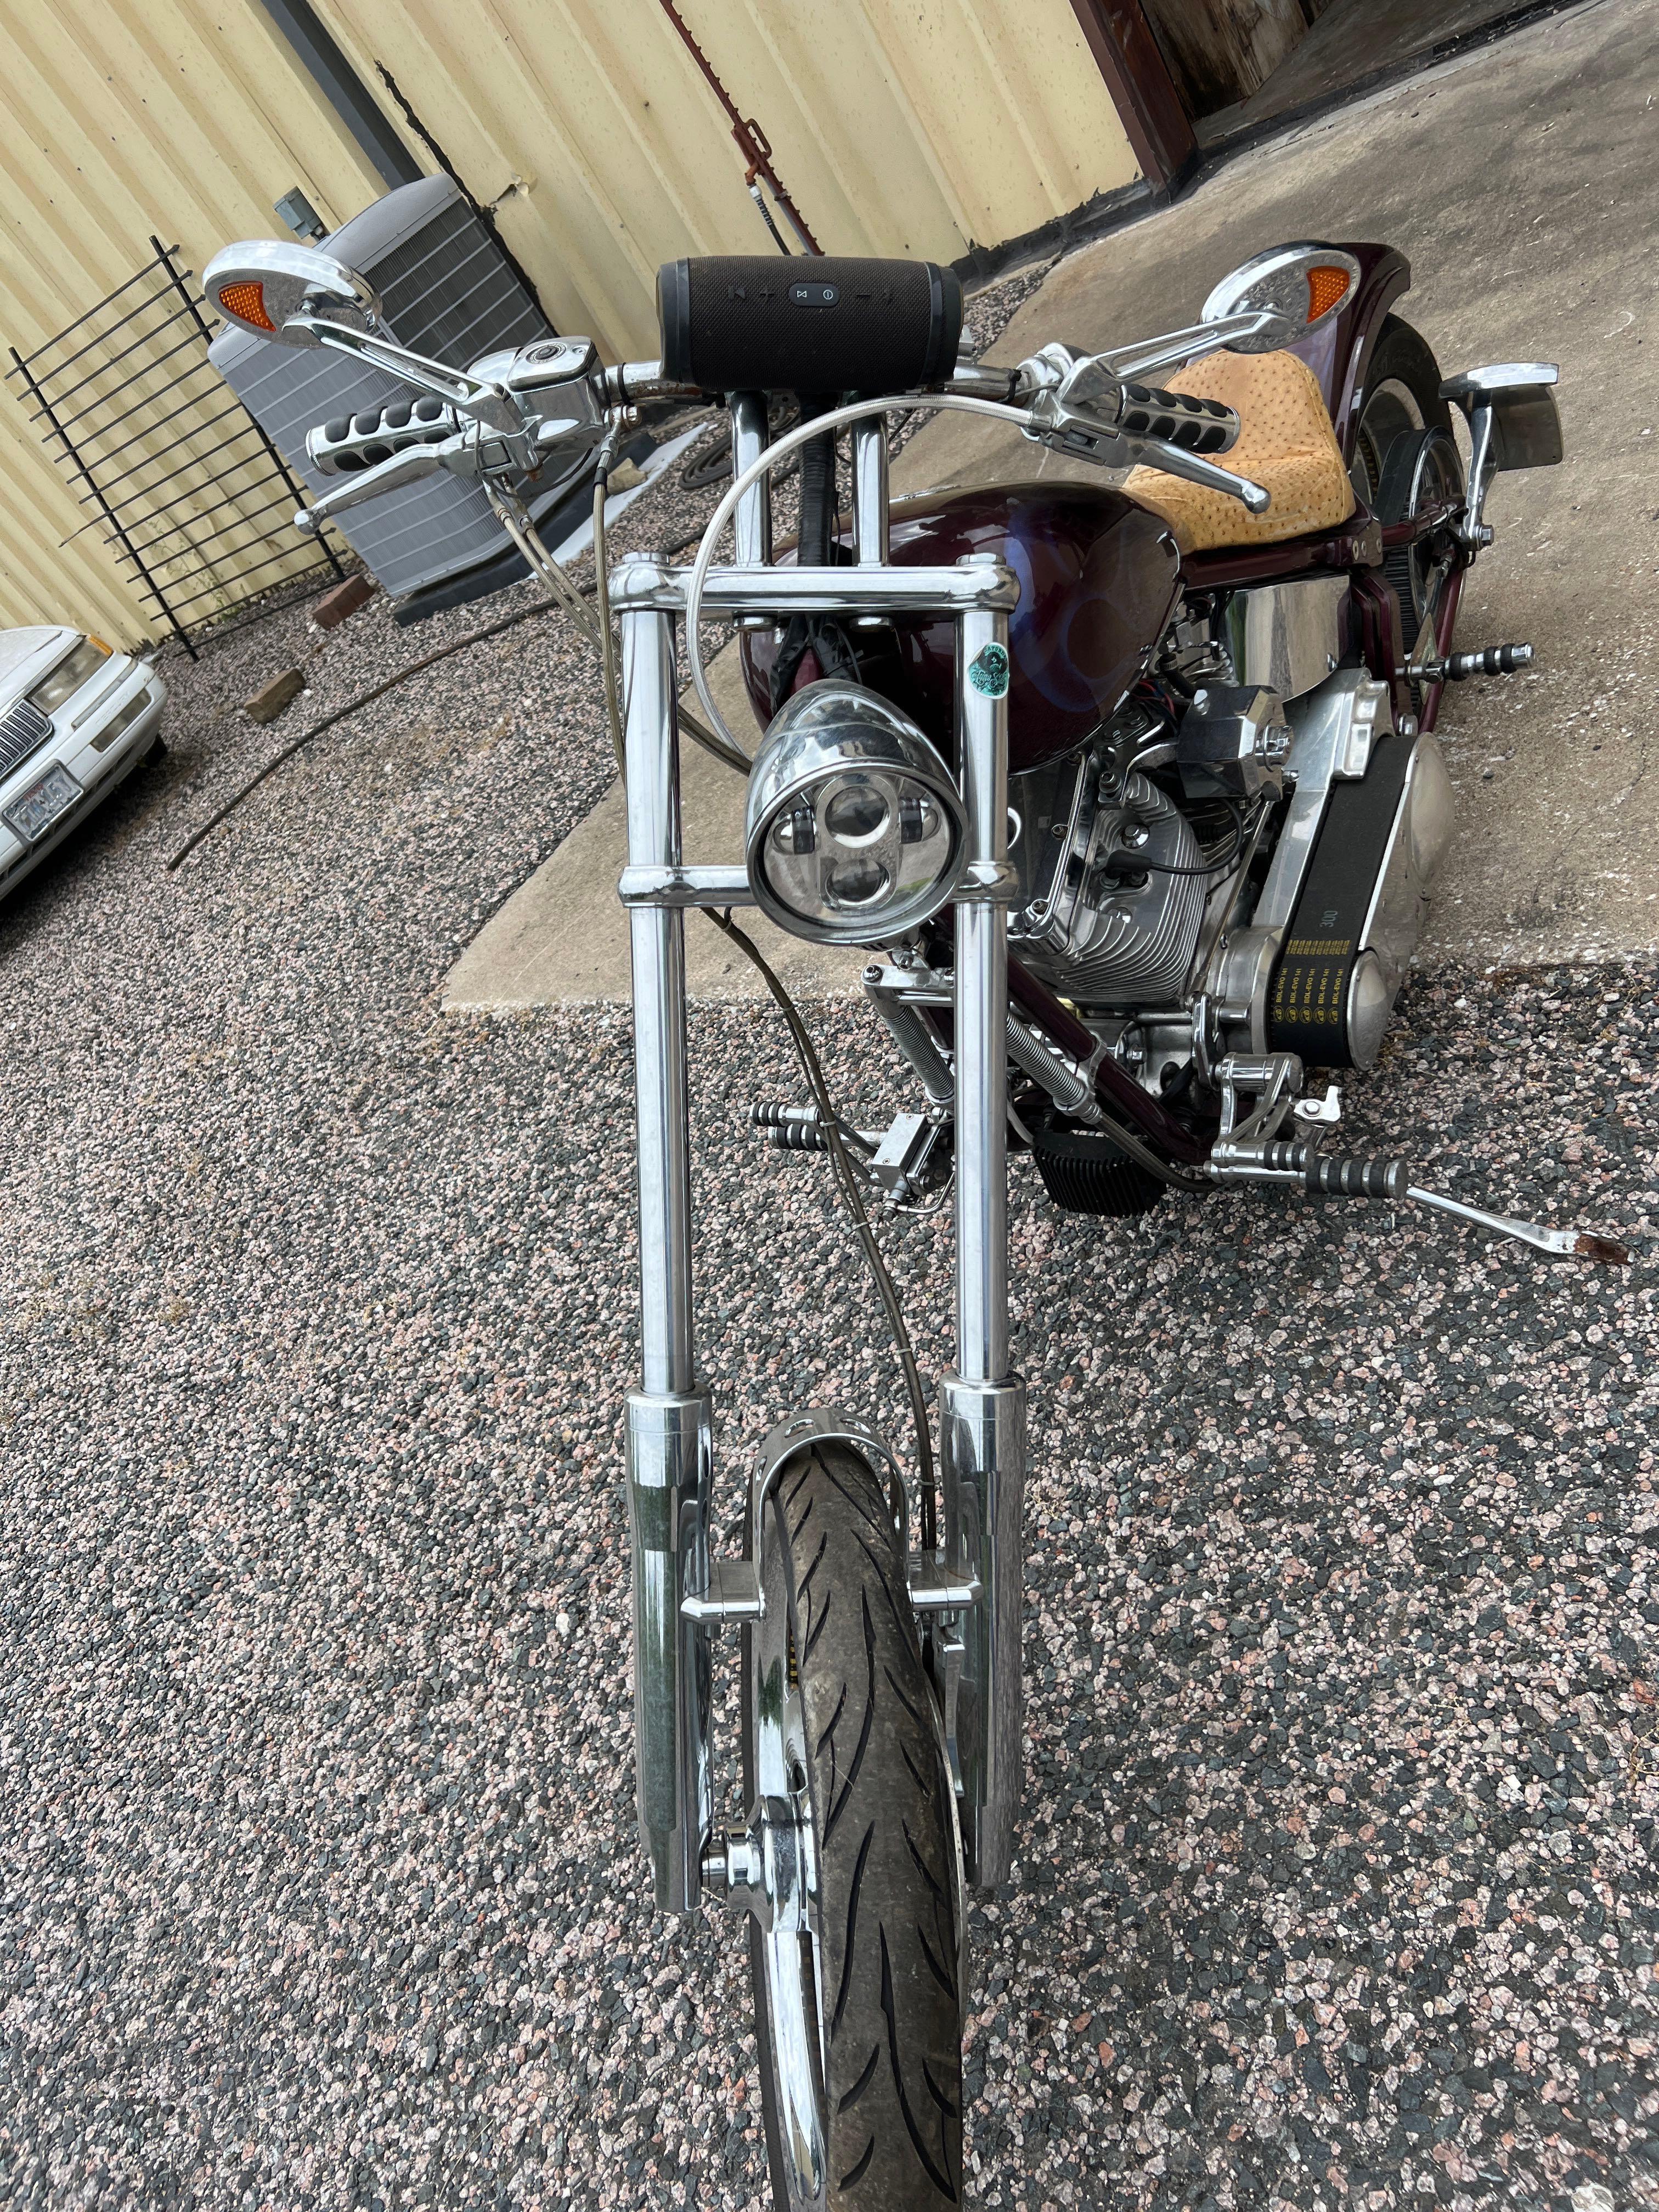 2010 ASVE Custom Built Motorcycle with Custom Paint Job - Miles Unknown